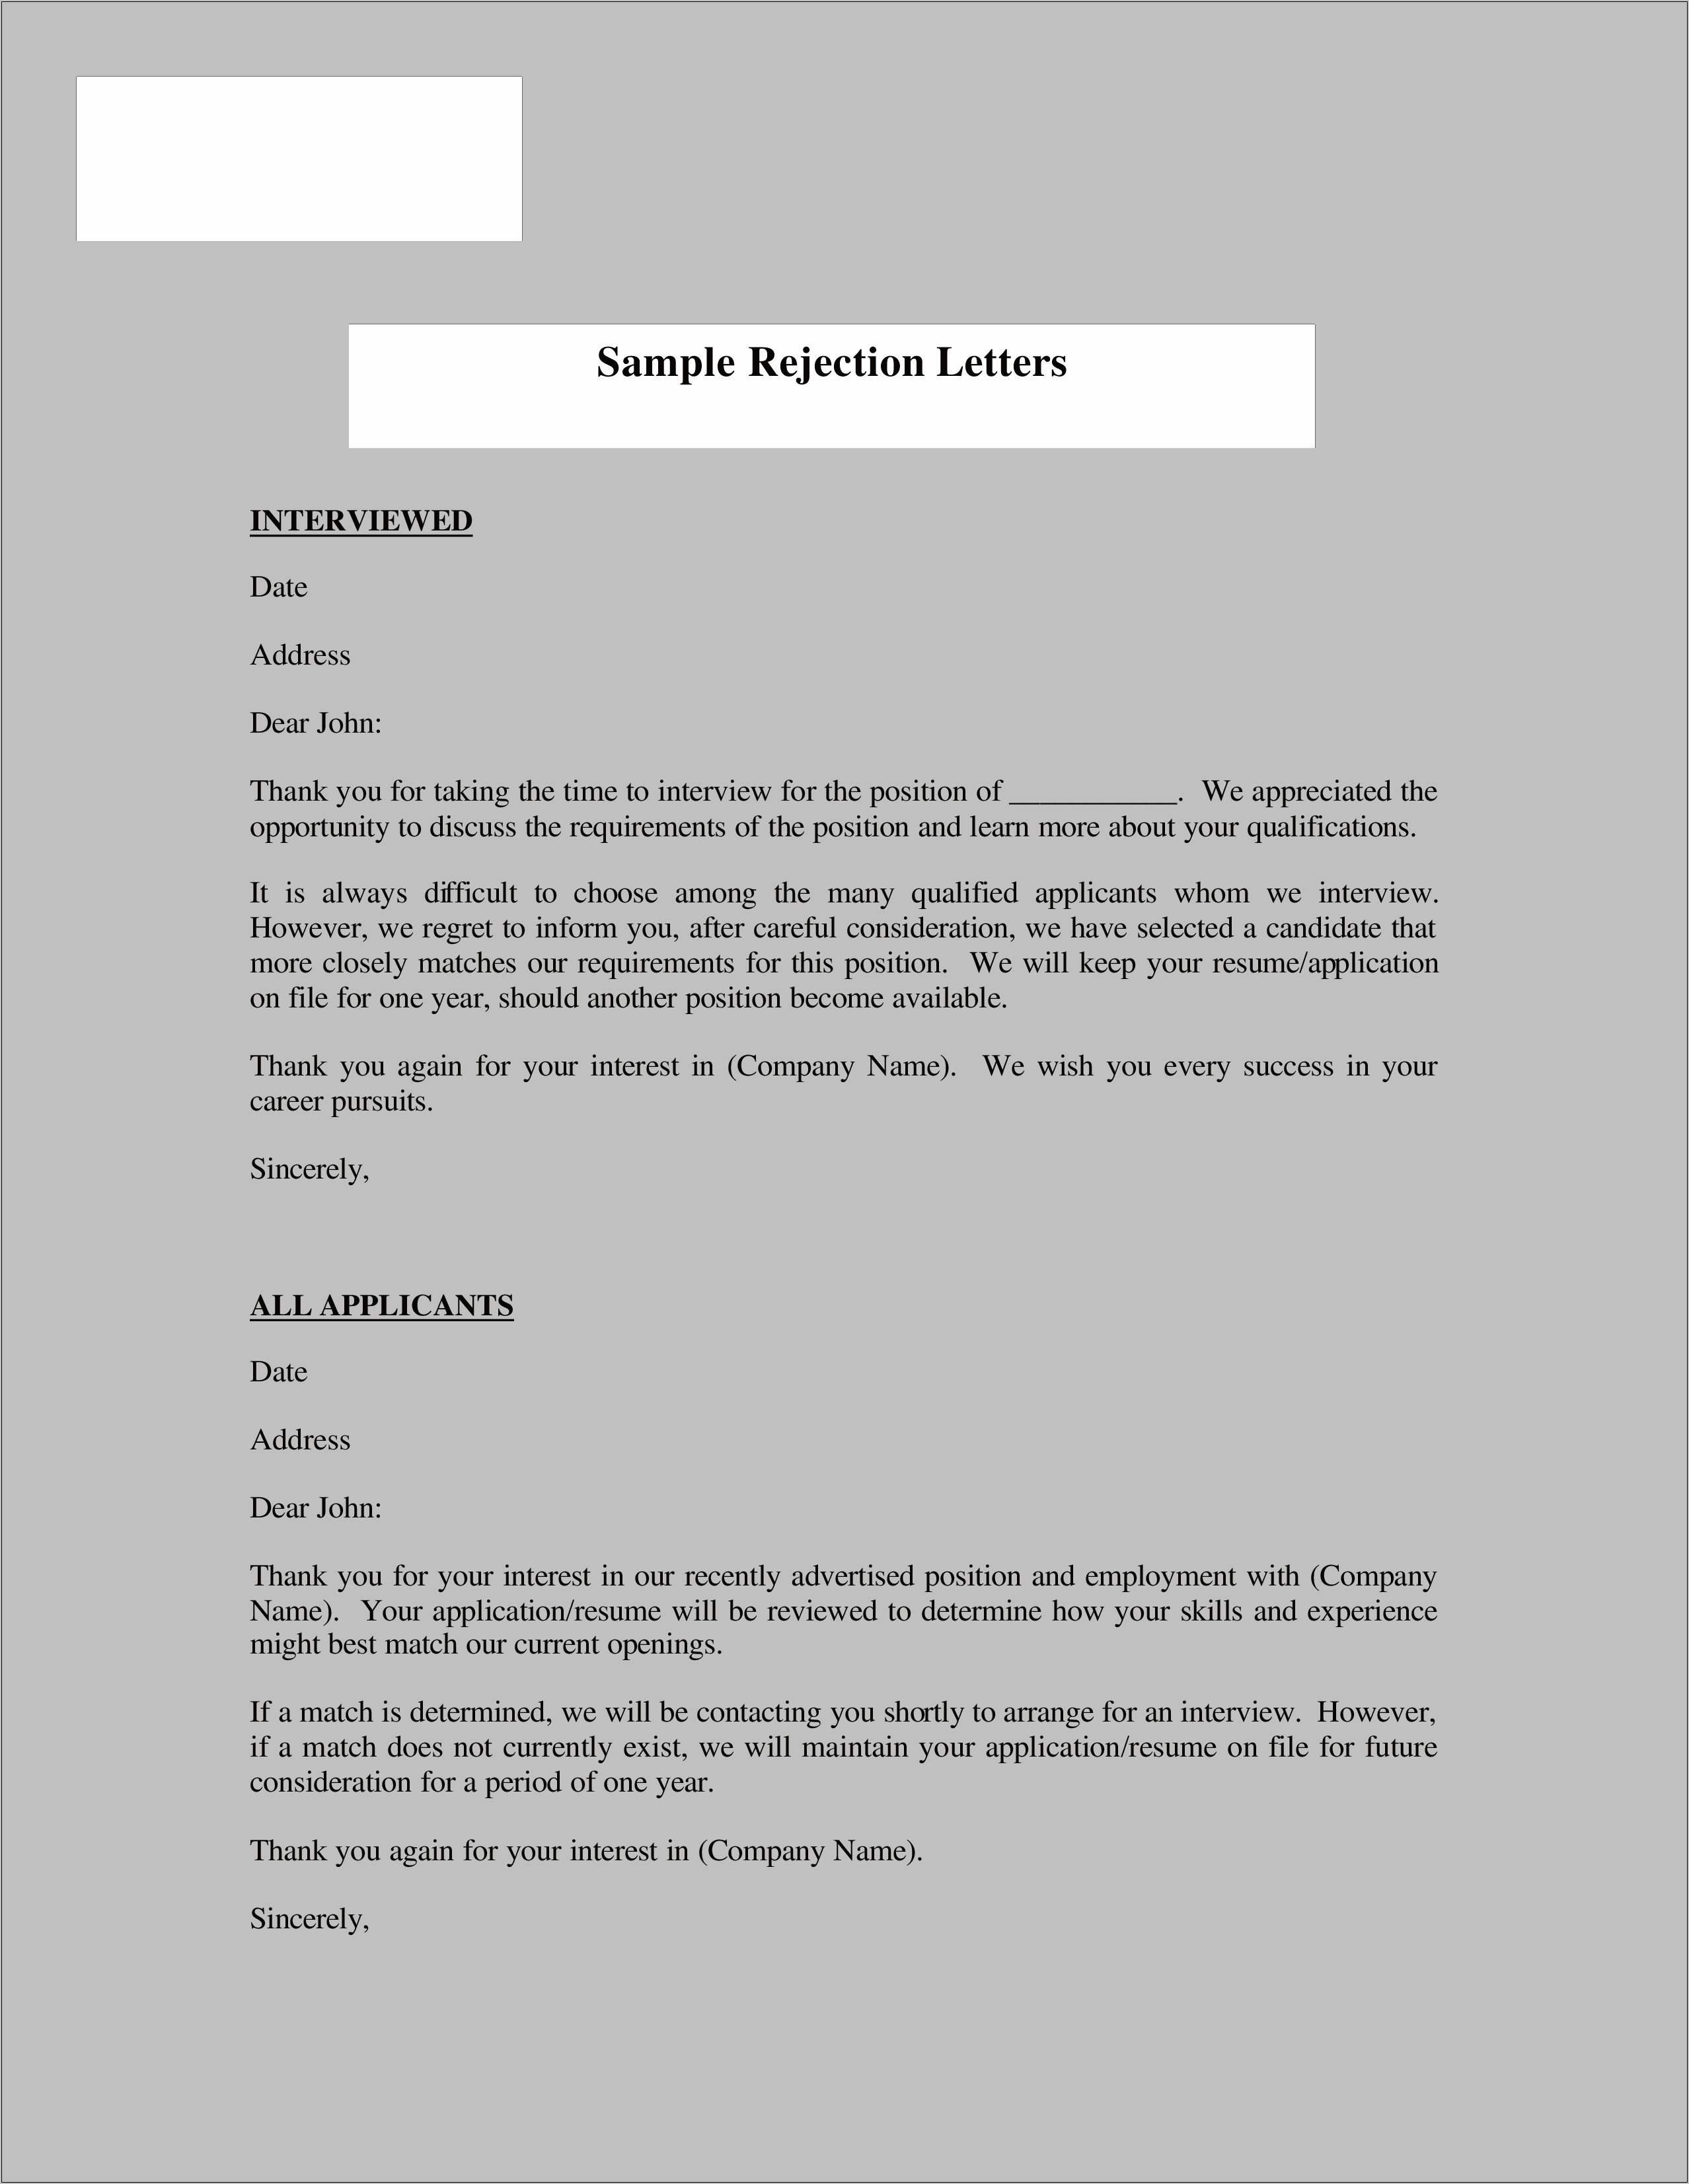 Sample Rejection Letter For Unsolicited Resume